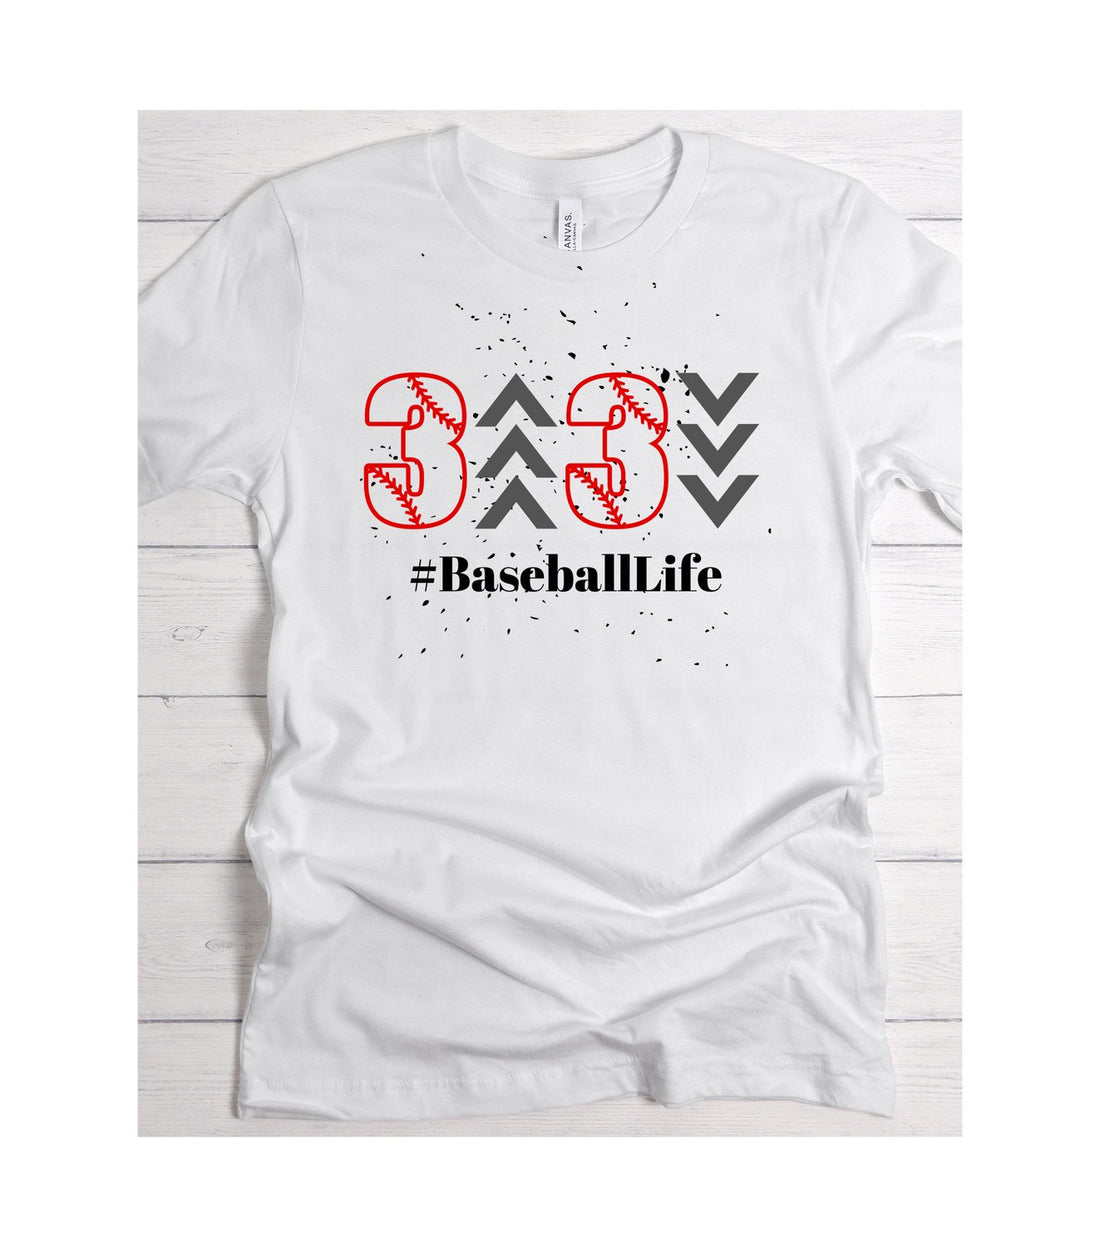 3 Up 3 Down Baseball Life - T-Shirt - Positively Sassy - 3 Up 3 Down Baseball Life